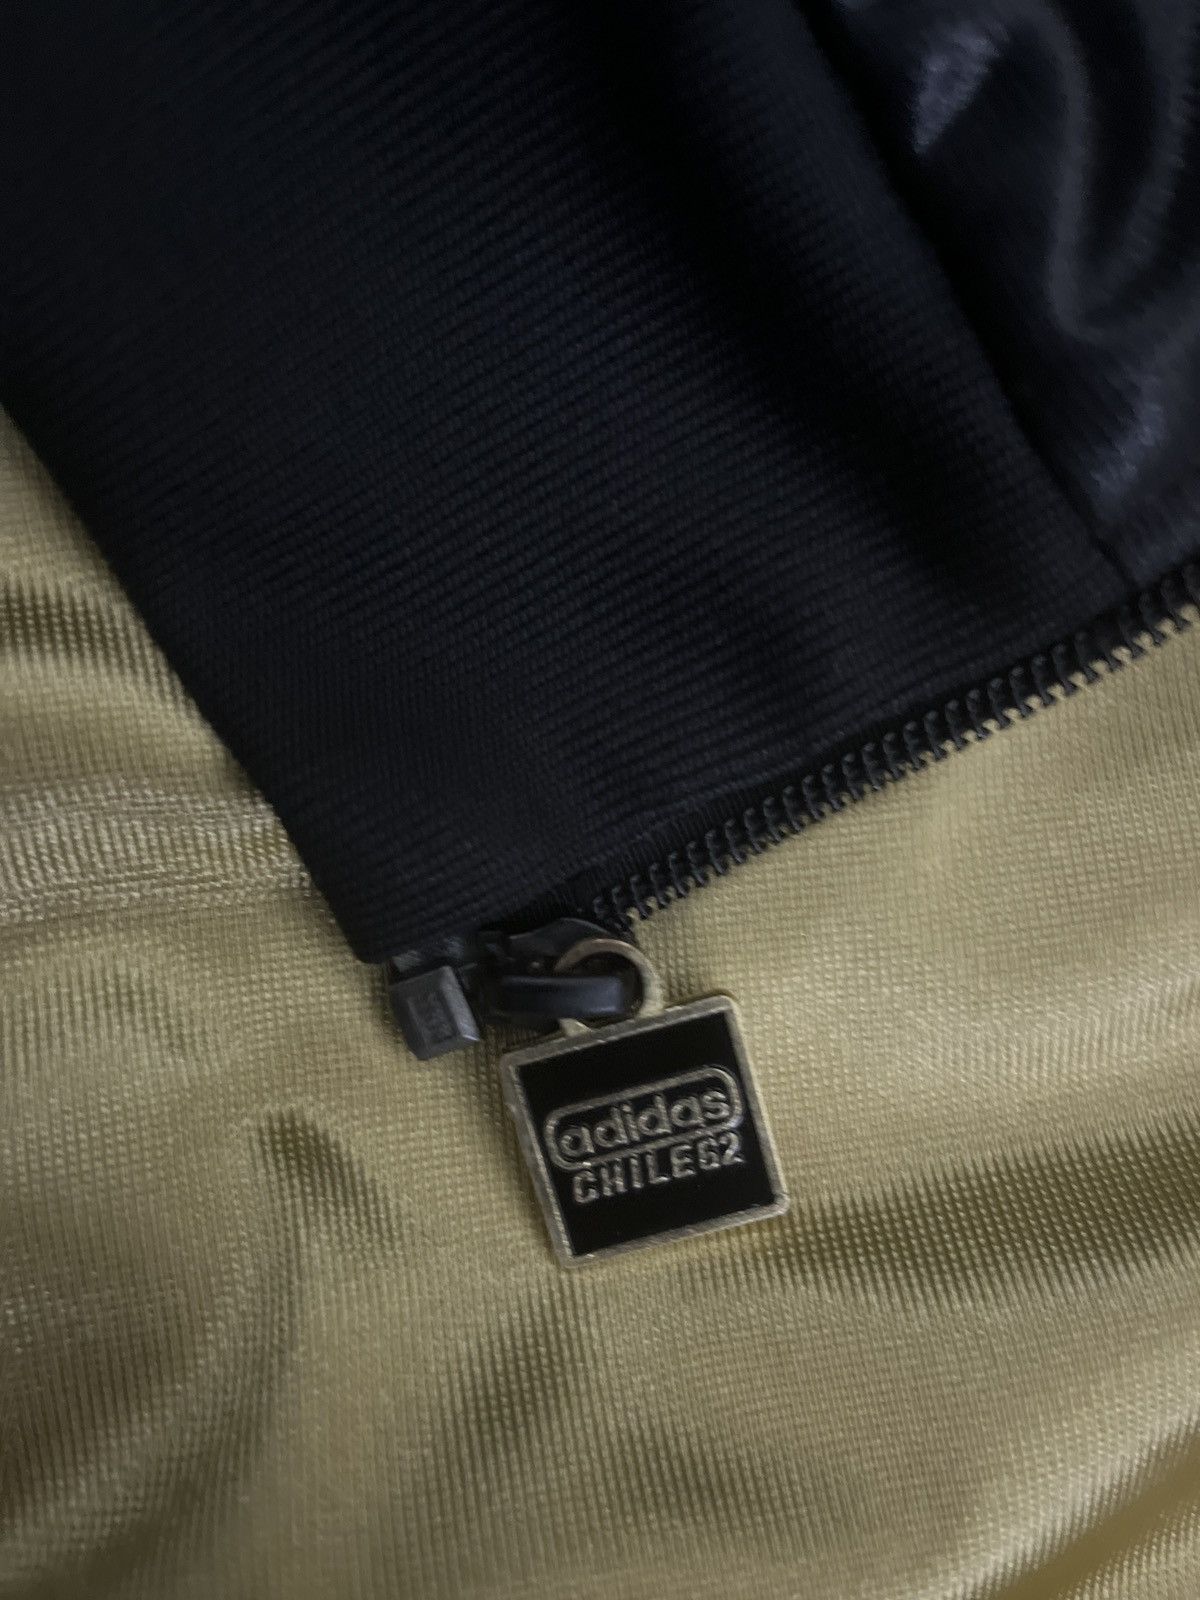 Adidas RARE Adidas Chile 62 Tracksuit Jacket Size US L / EU 52-54 / 3 - 4 Thumbnail